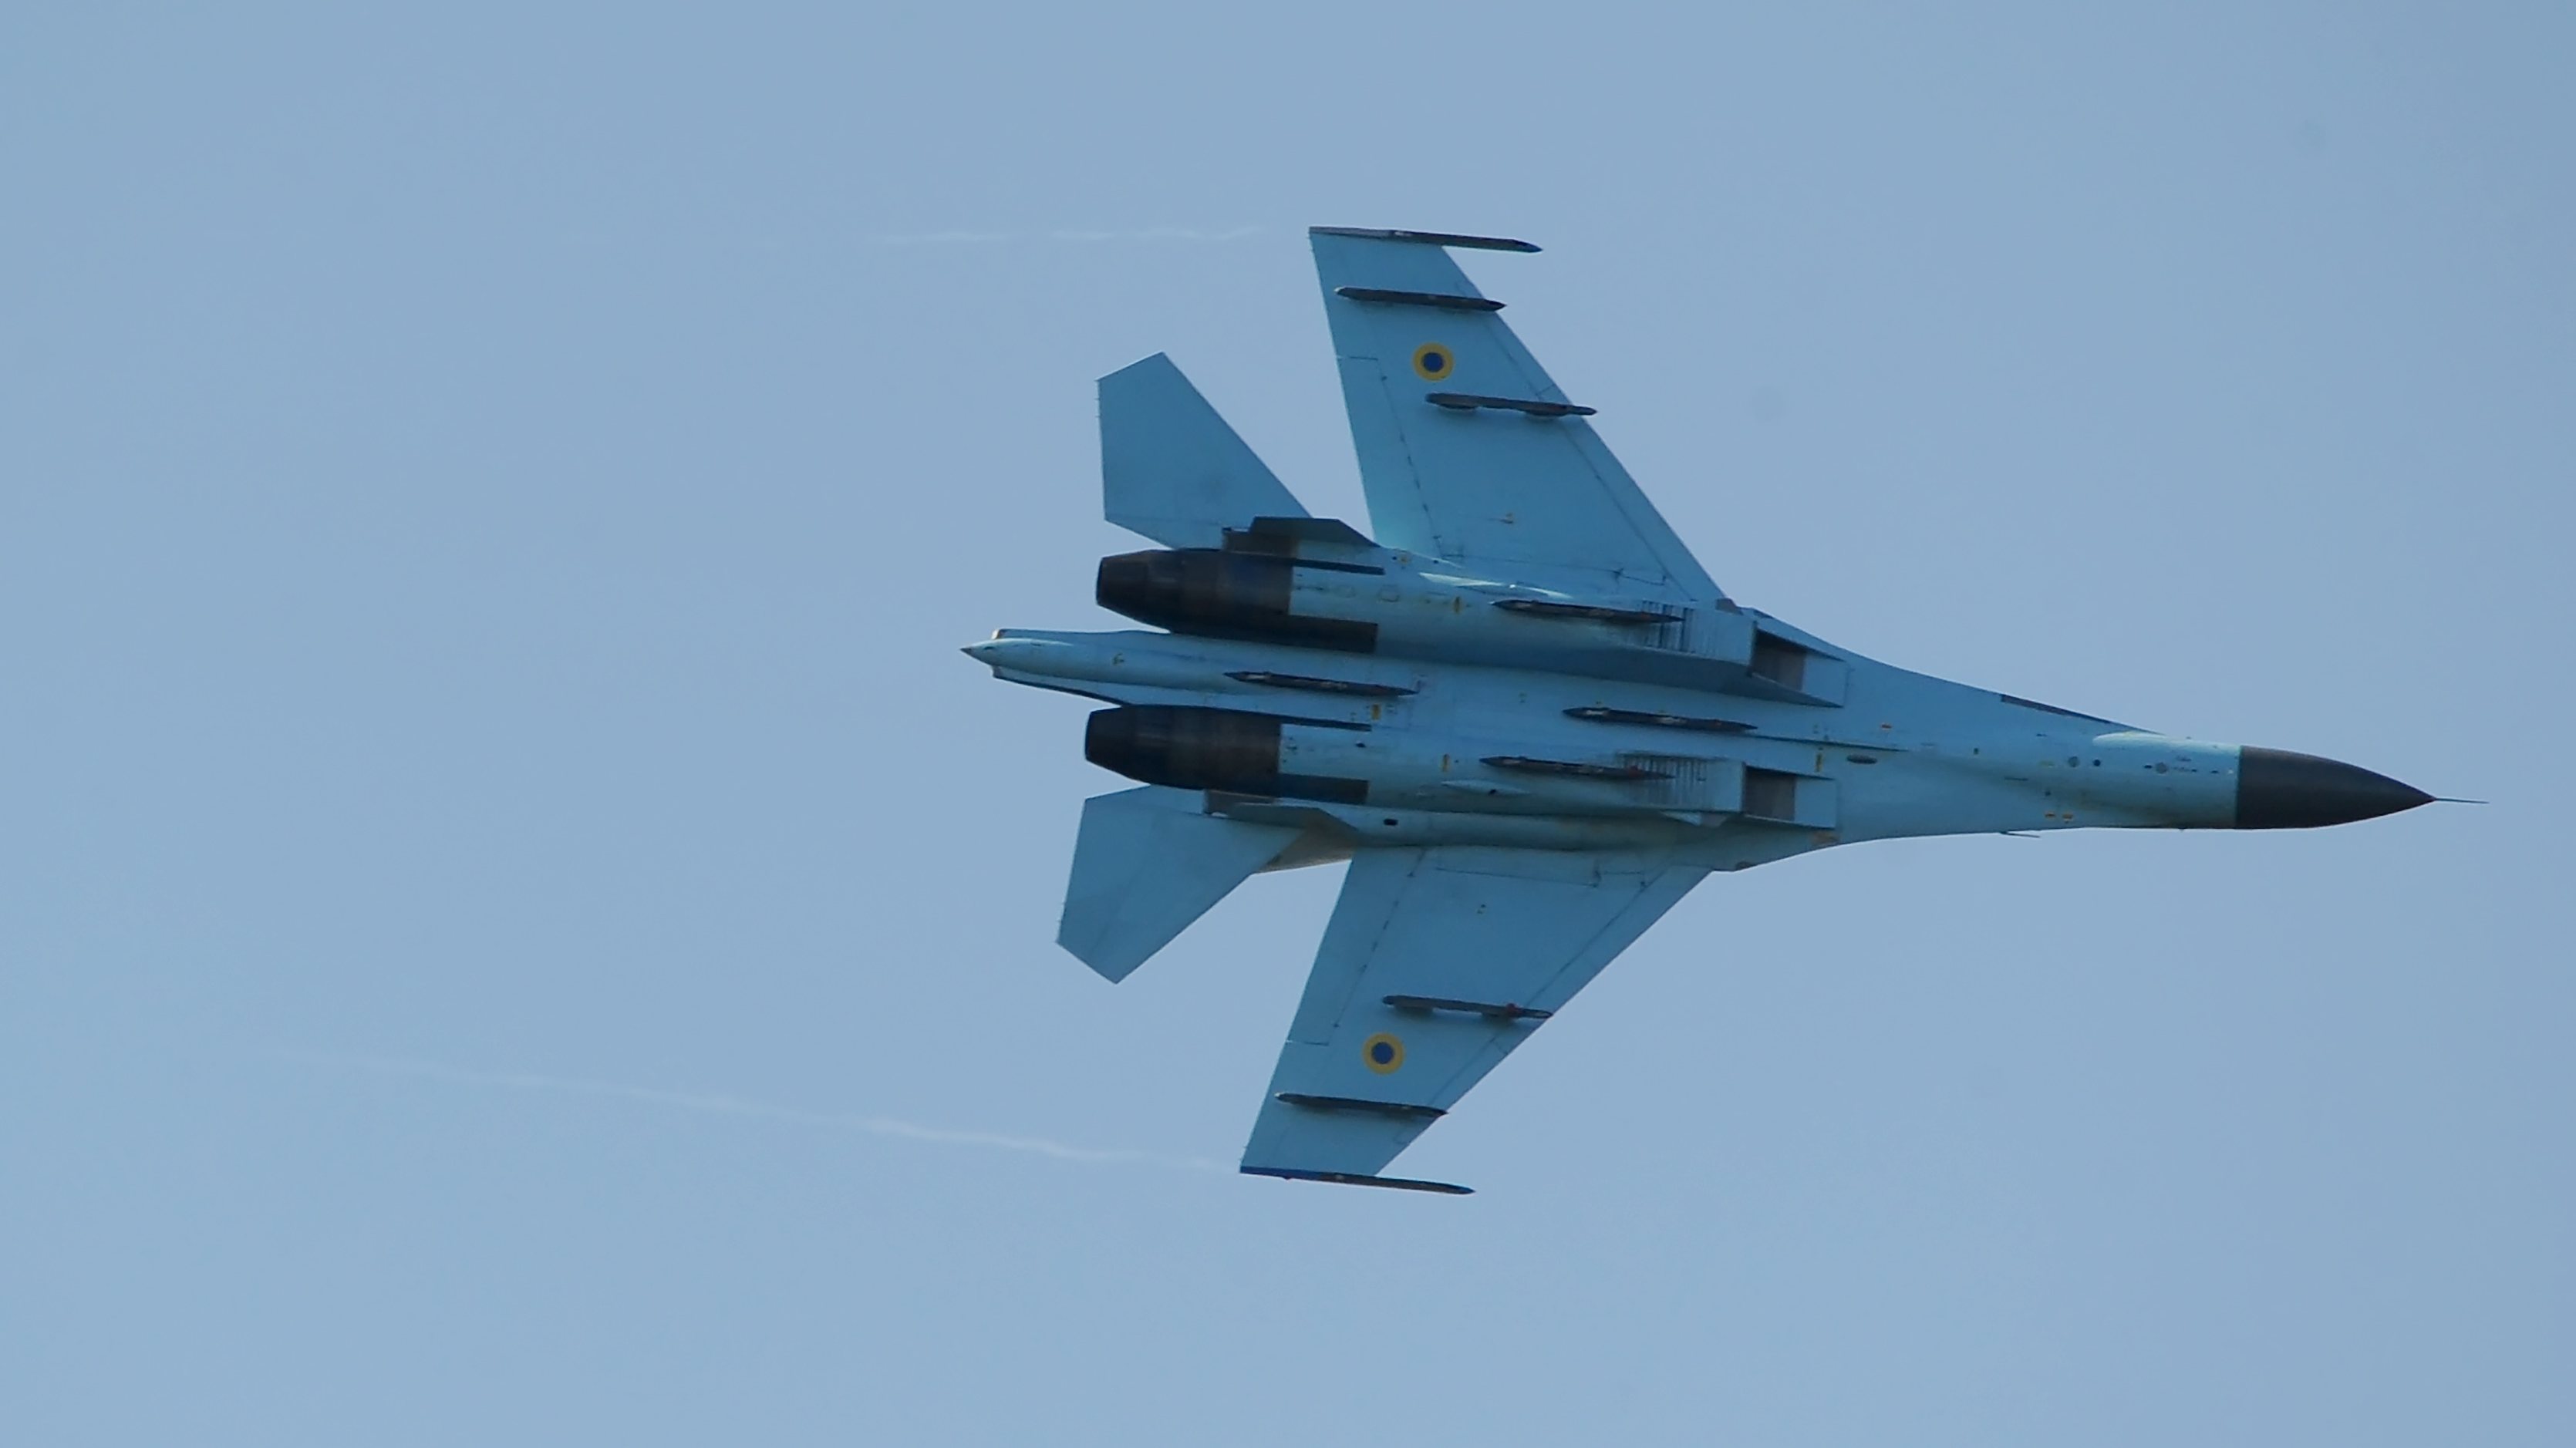 Flanker Sukhoi Su-27 Ukrainian fighter jet seen during the